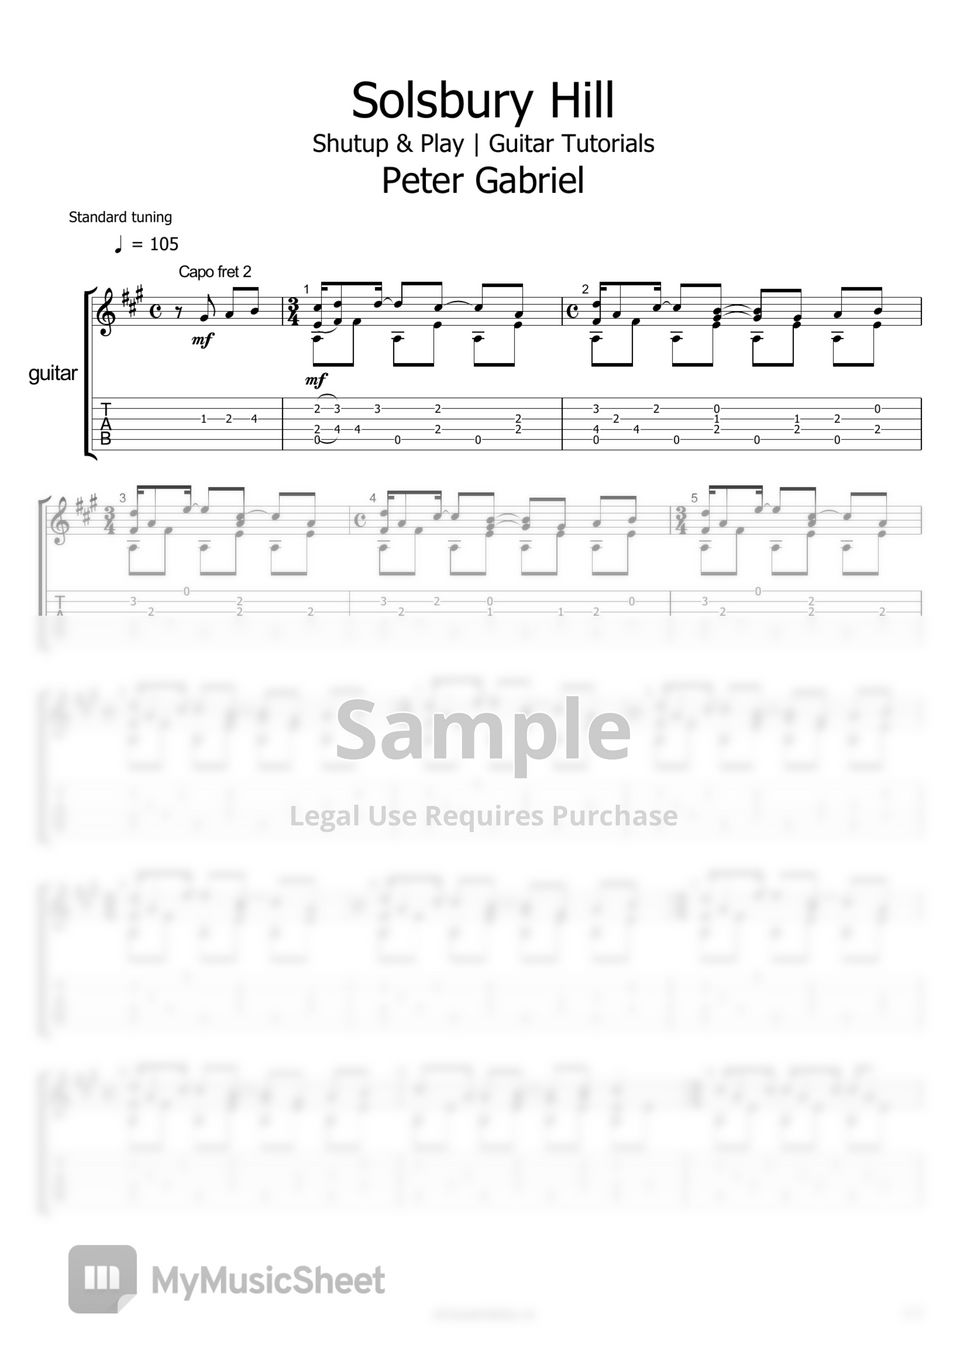 Peter Gabriel - Solsbury Hill by Shutup & Play Guitar Tutorials